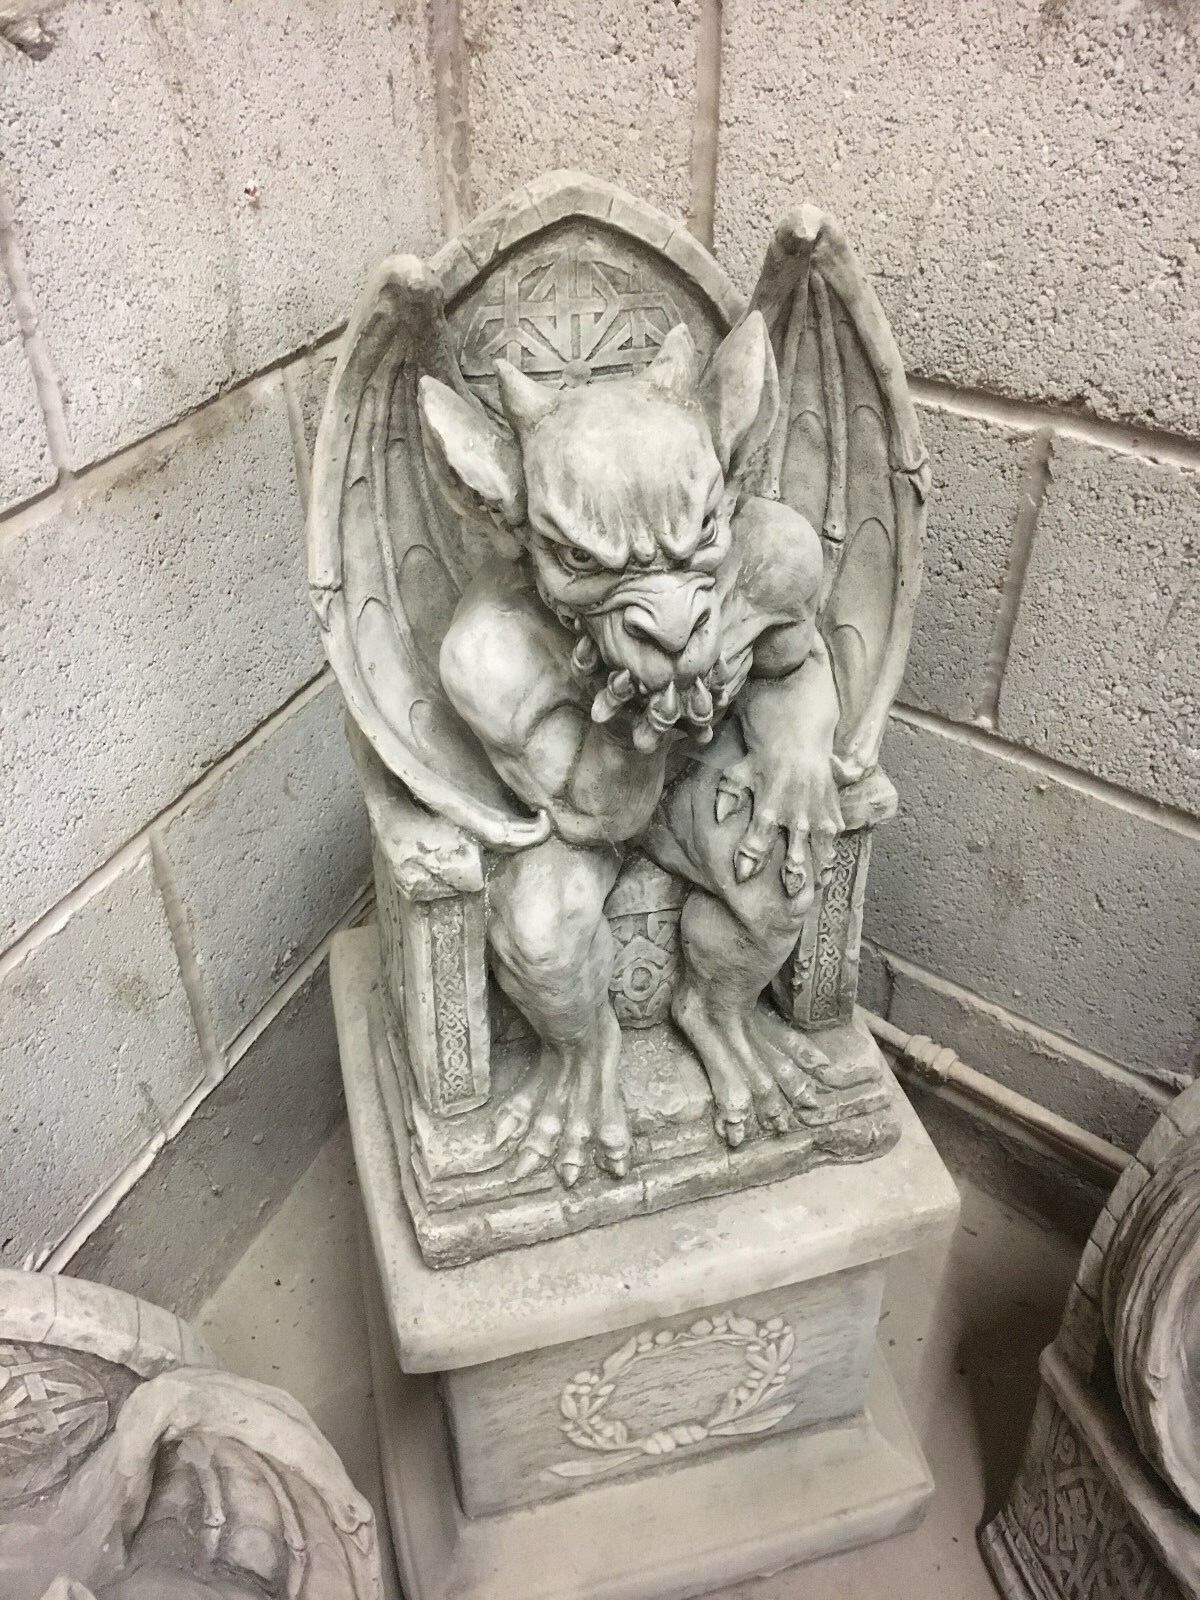 Stone King Gargoyle on Throne Statue